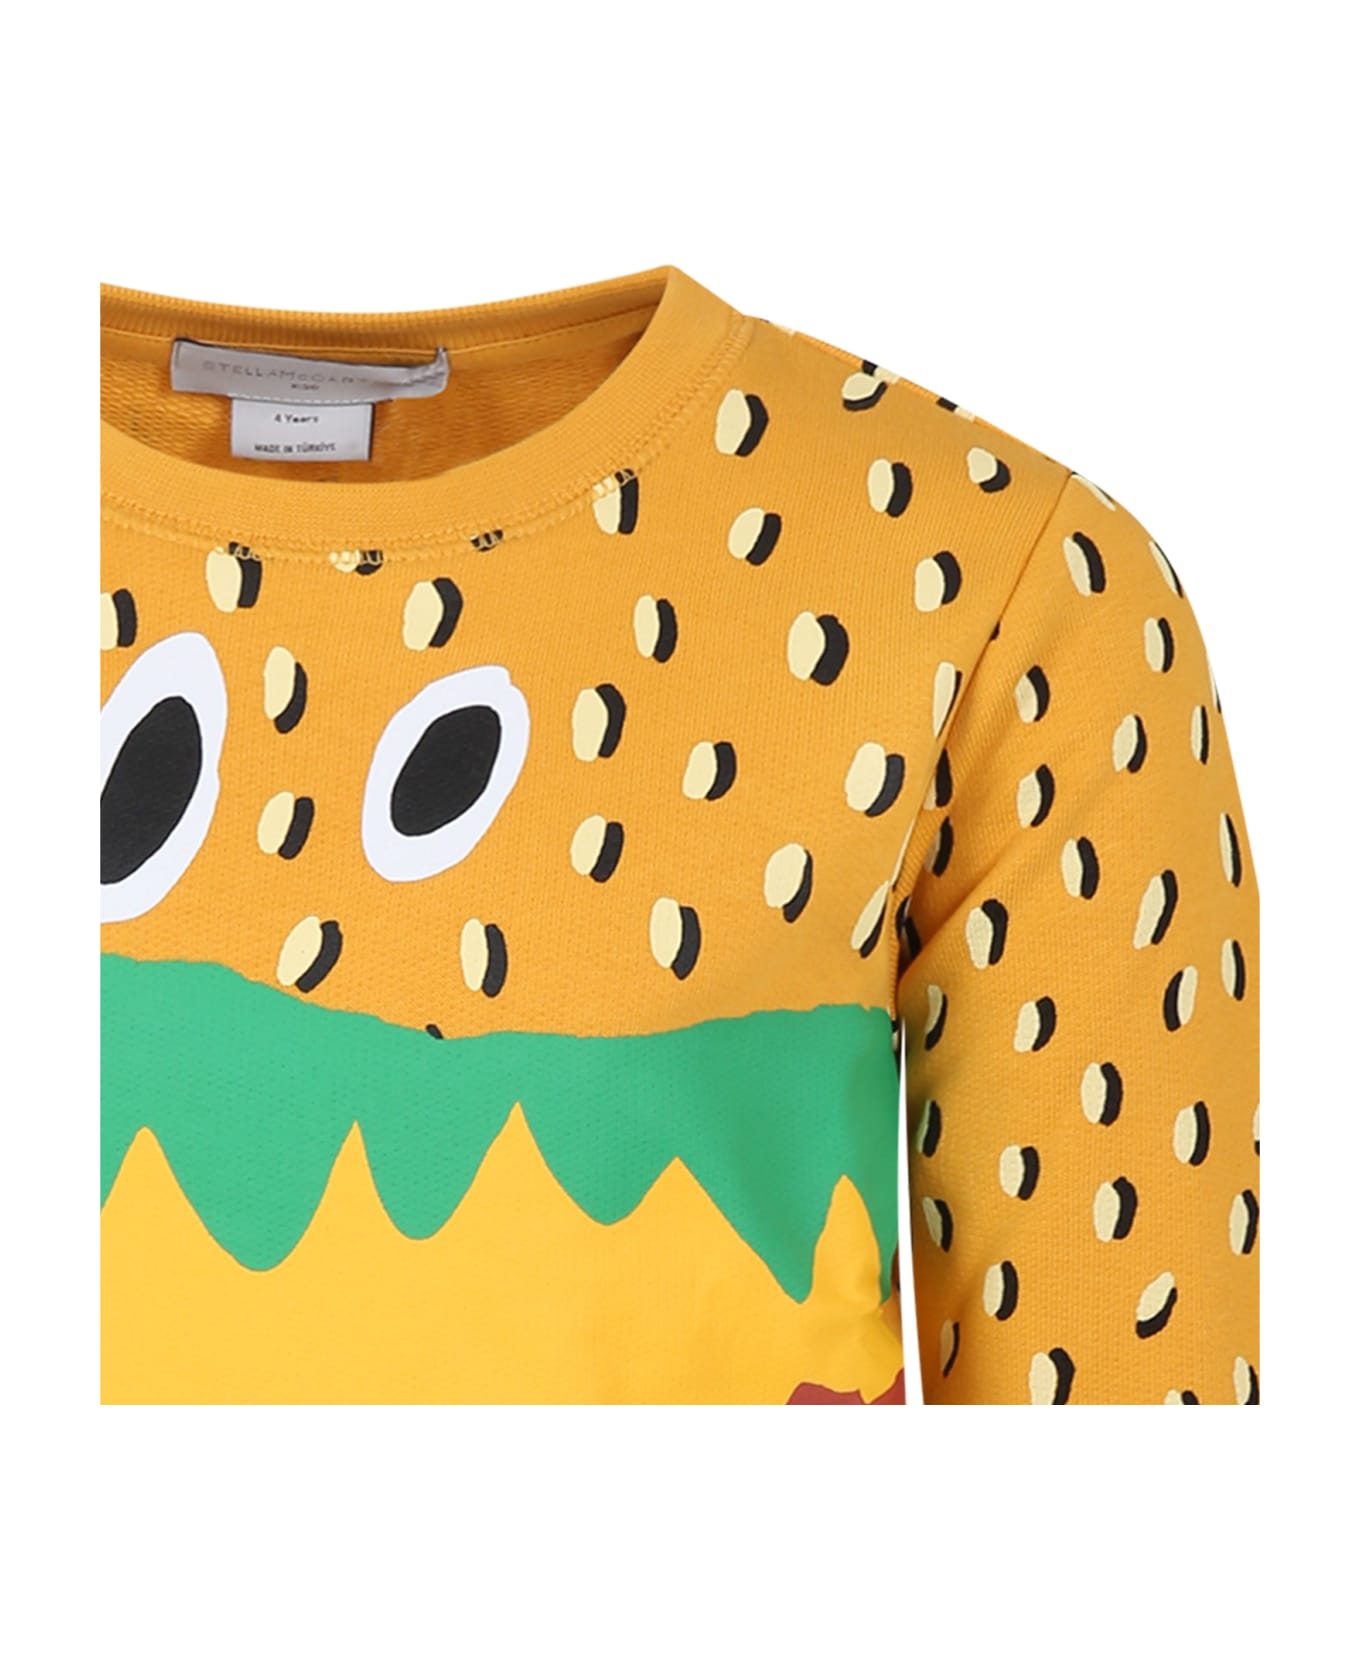 Stella McCartney Kids Yellow Sweatshirt For Boy With Hamburger Print - Yellow